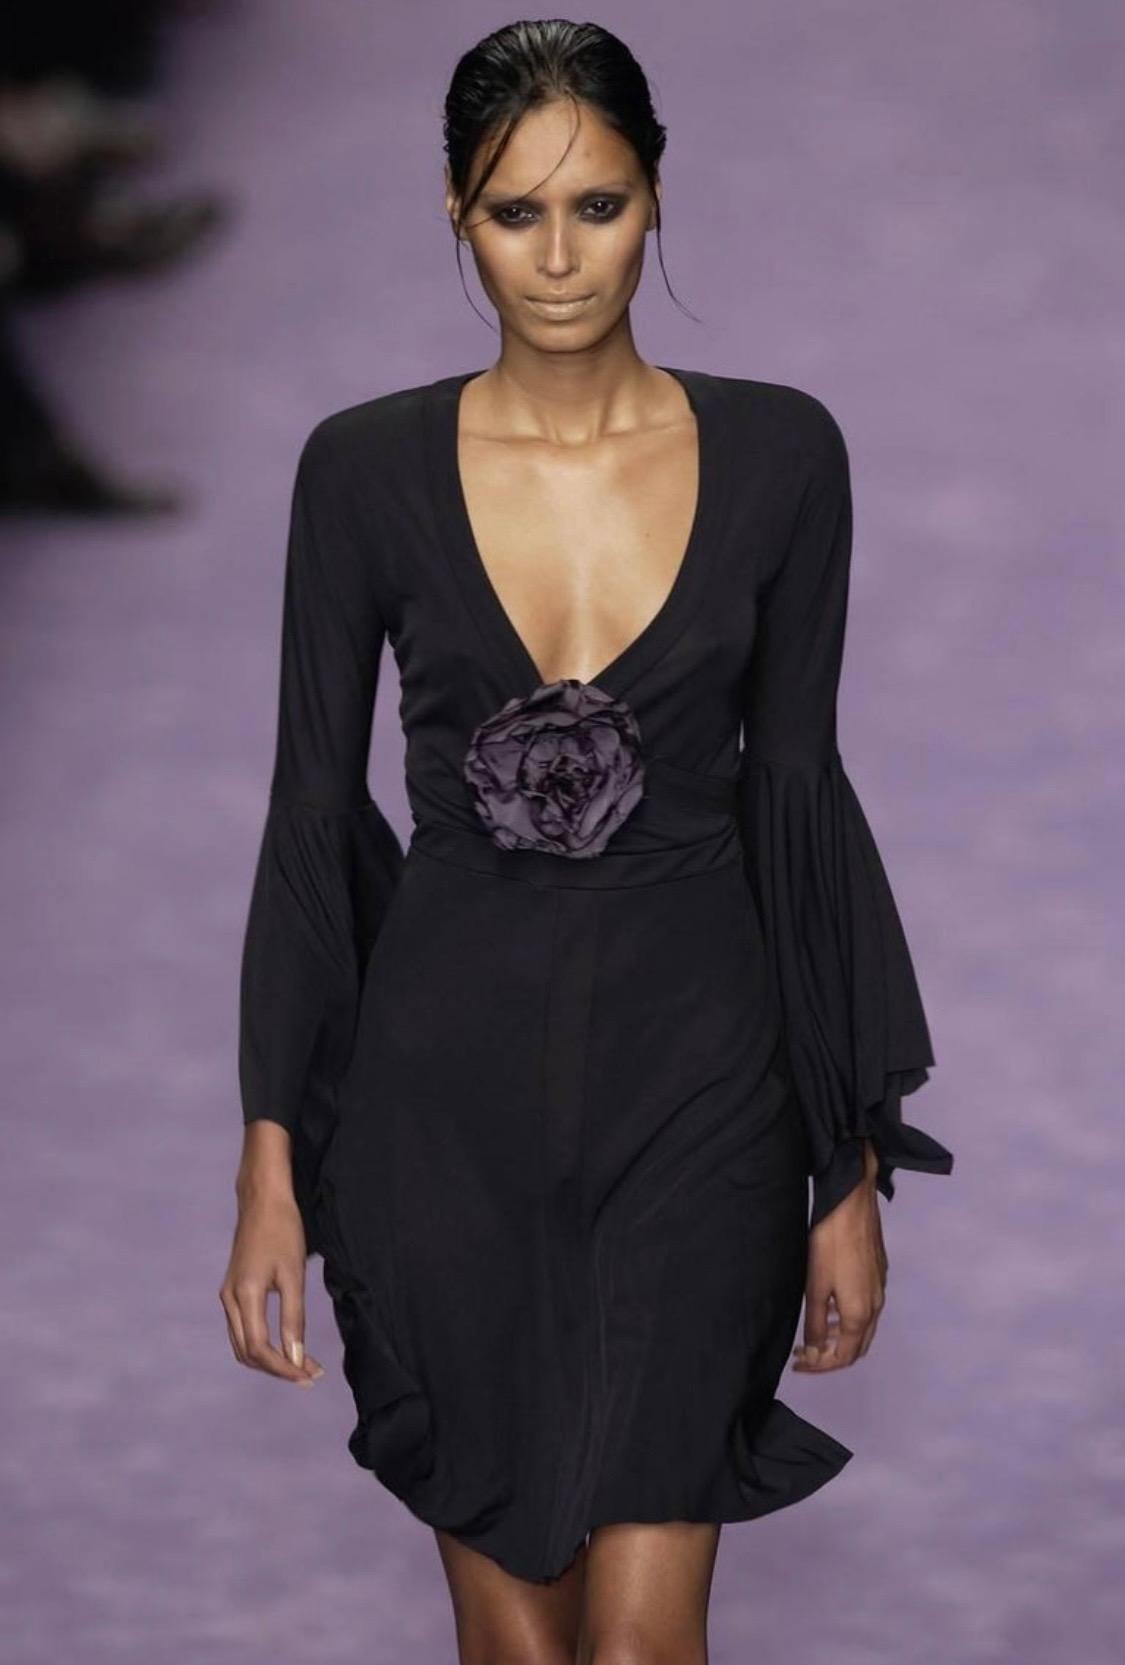 S/S 2003 Yves Saint Laurent by Tom Ford Black Floral Applique Runway Dress For Sale 1